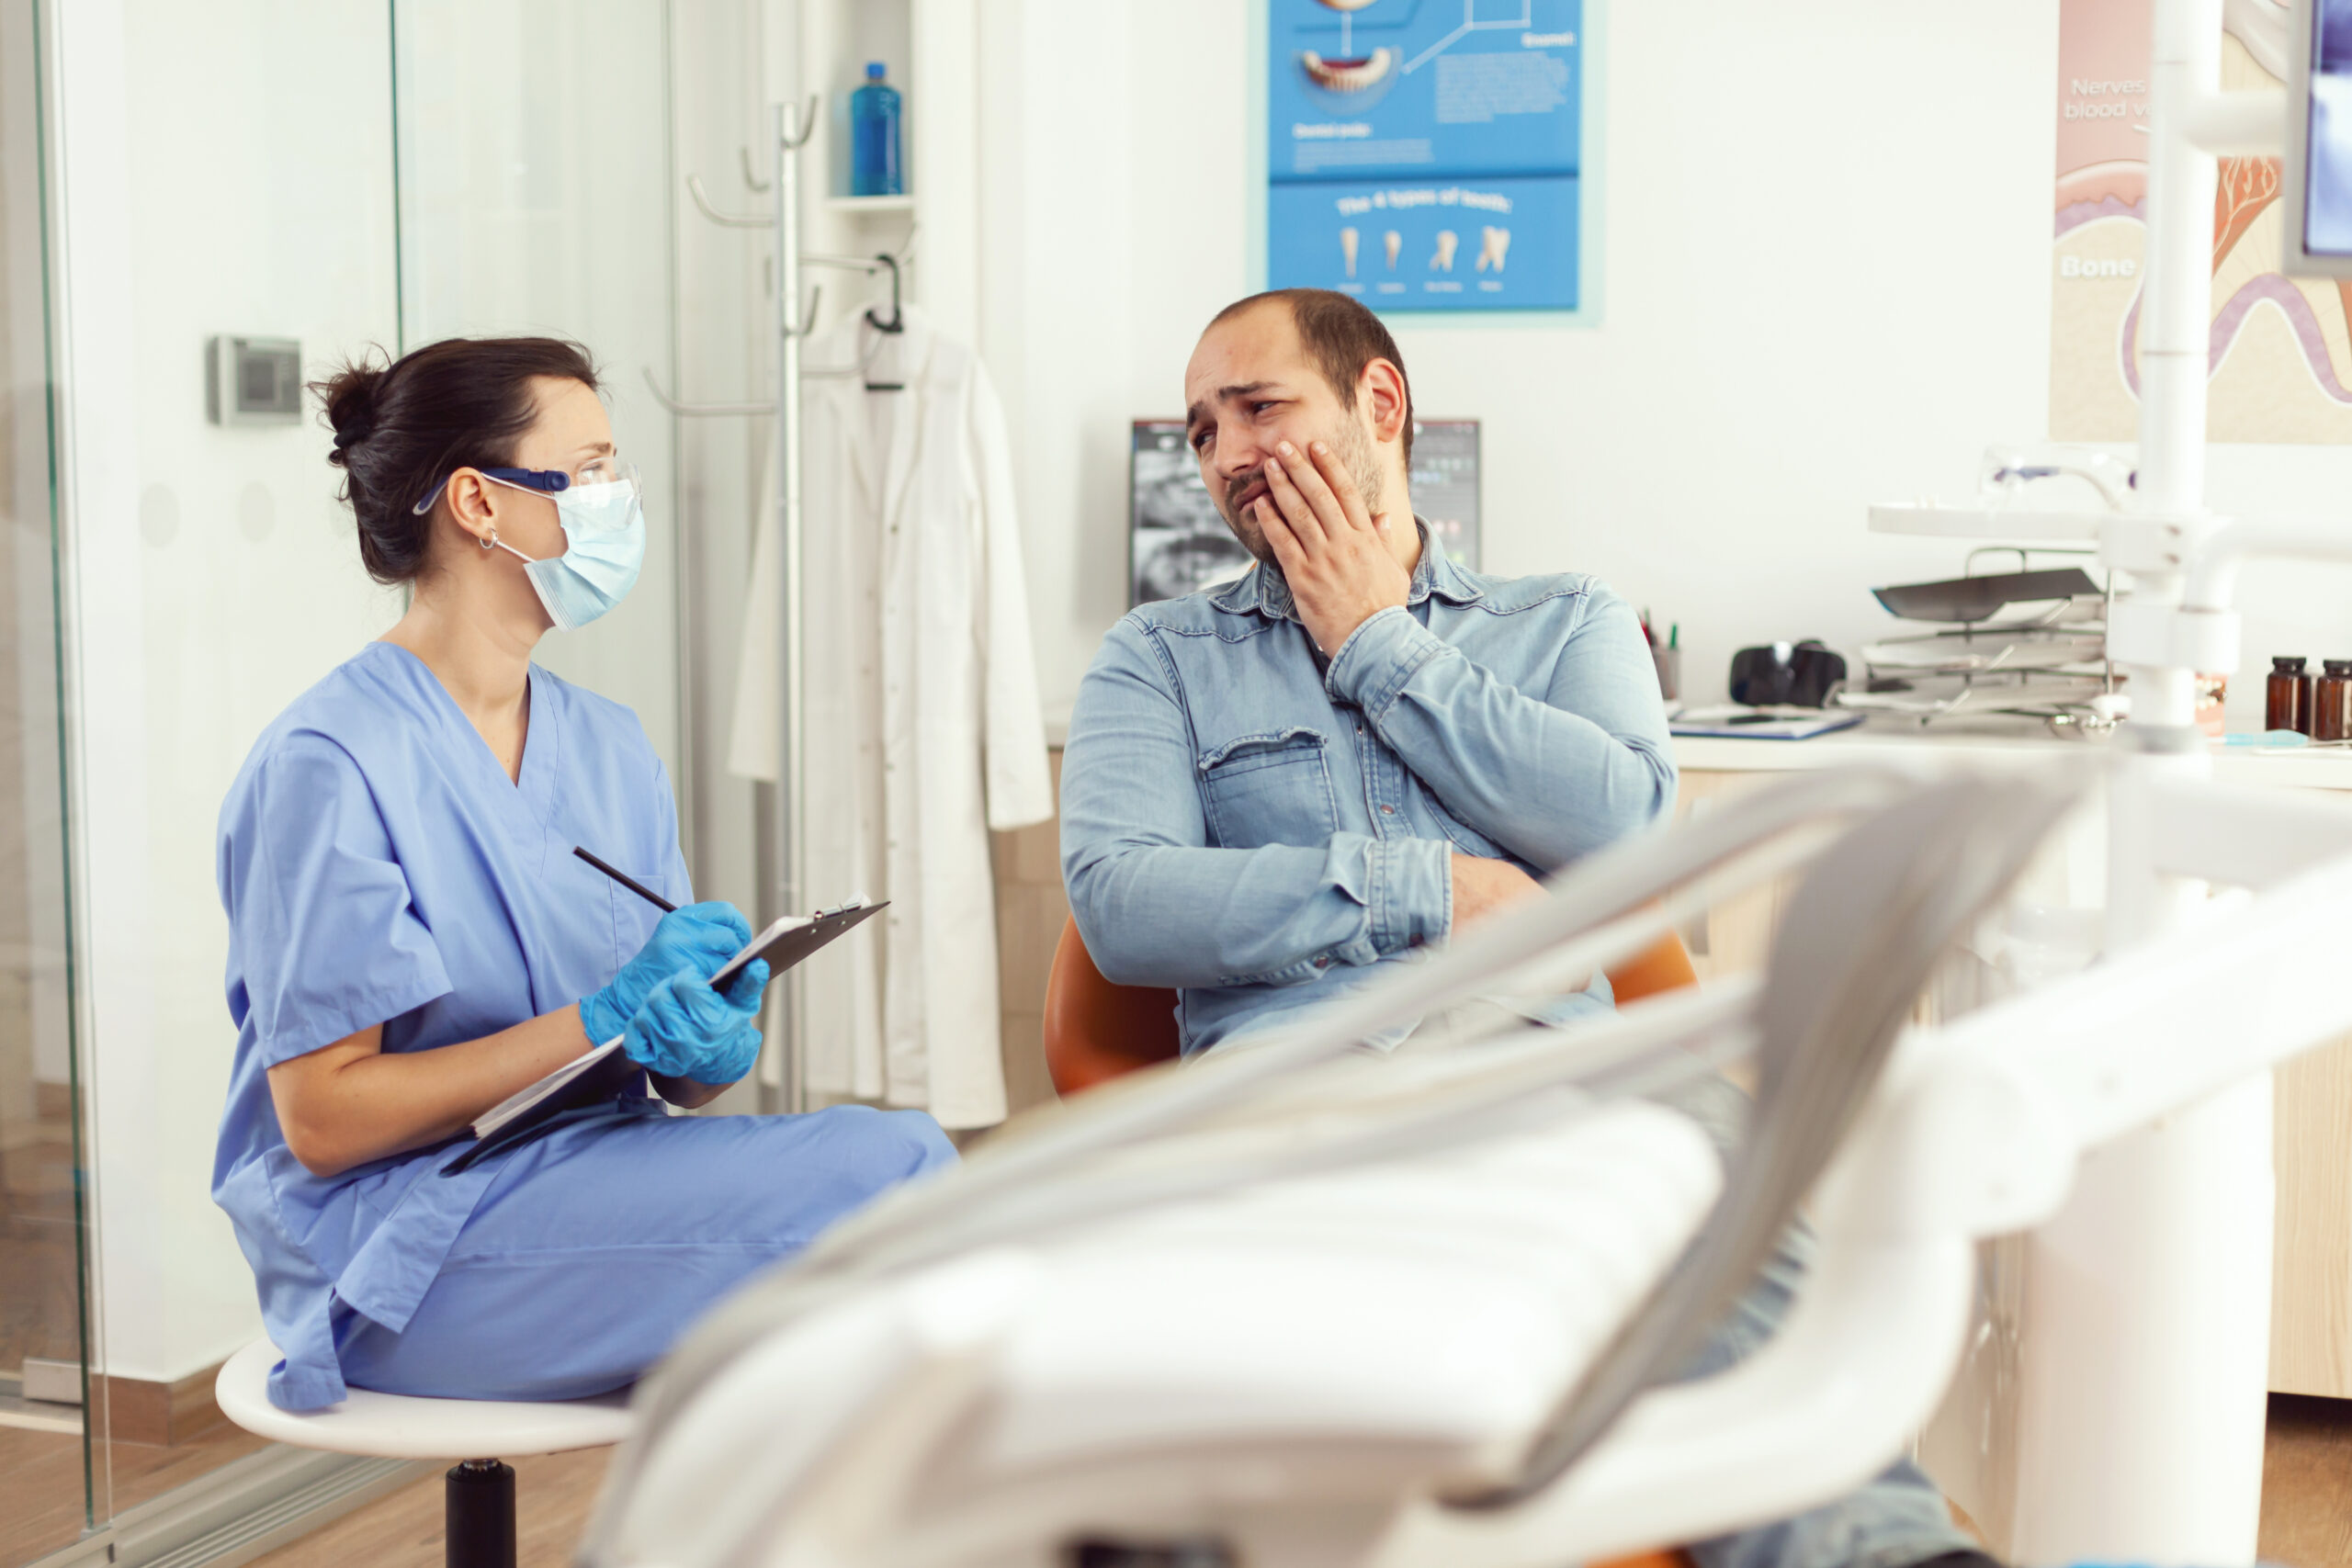 dentista escutando as queixas de dor de dente do paciente e anotando